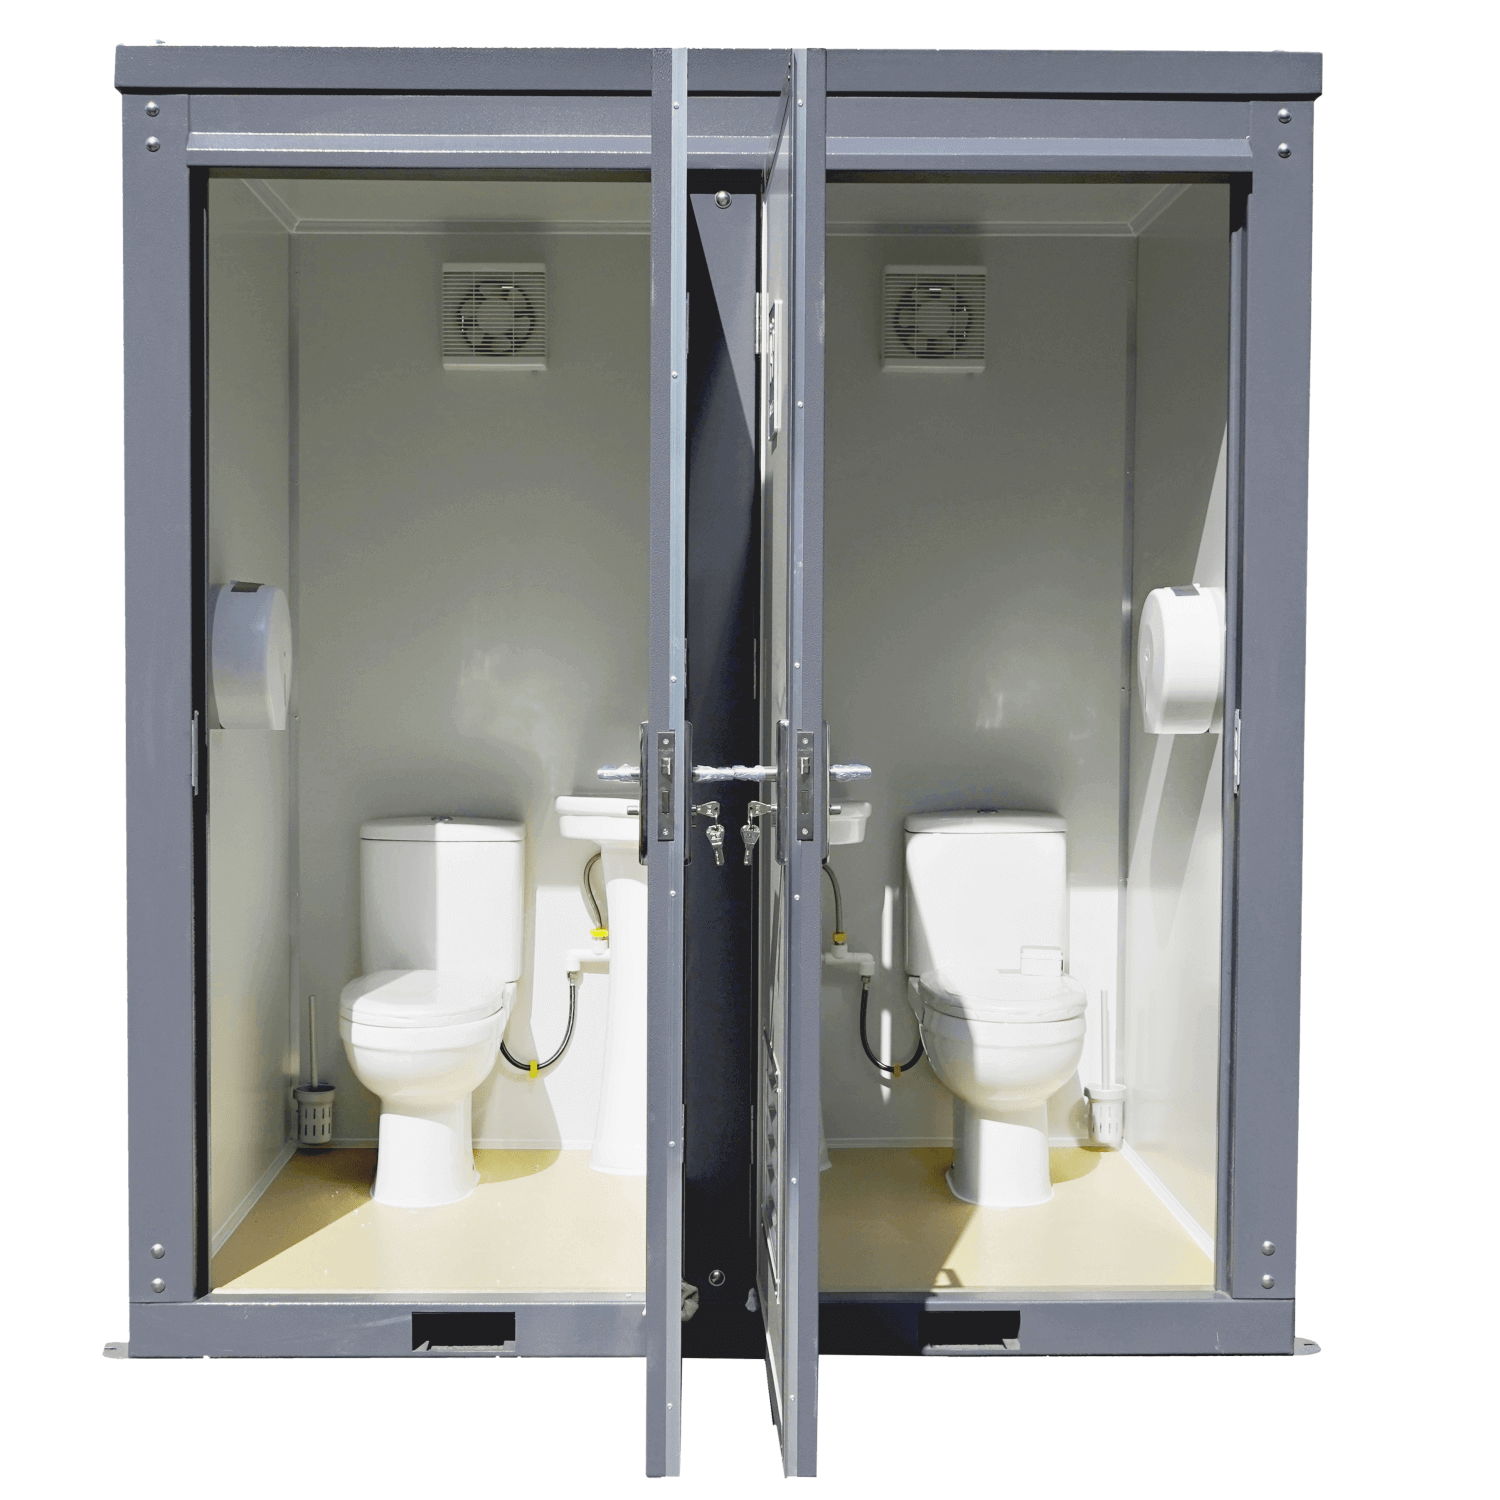 Bastone 2 Private  Toilet Stalls Portable Restroom